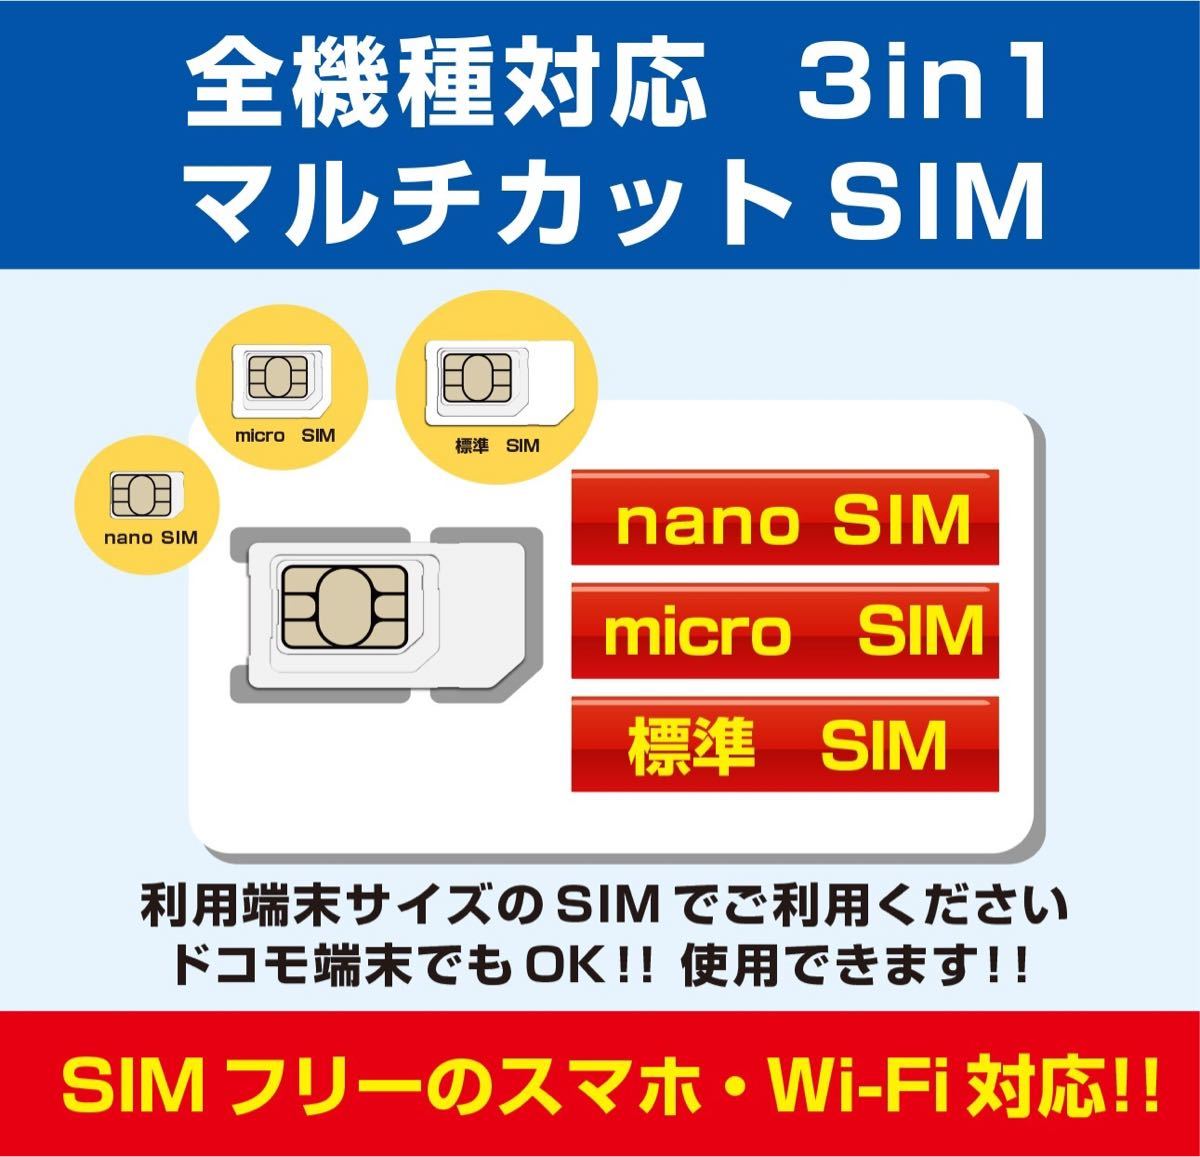 SMS認証プリペイドデータ通信SIM 30GB/月 6カ月有効 ドコモ回線 - SIM